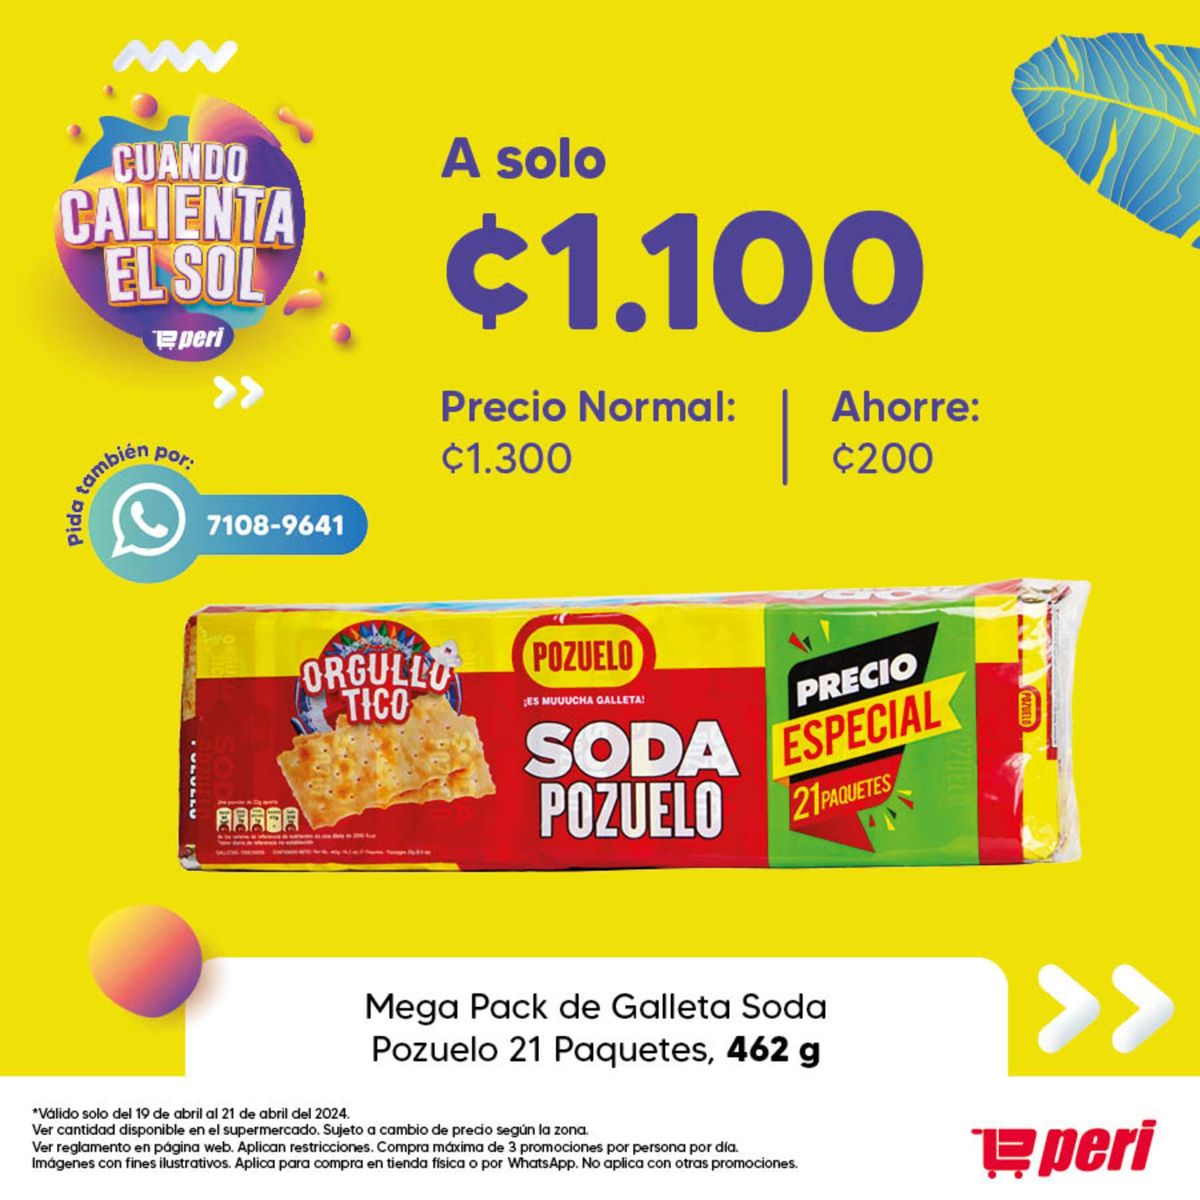 Mega Pack de Galleta Soda Pozuelo 21 Paquetes, 462g - 1.100€